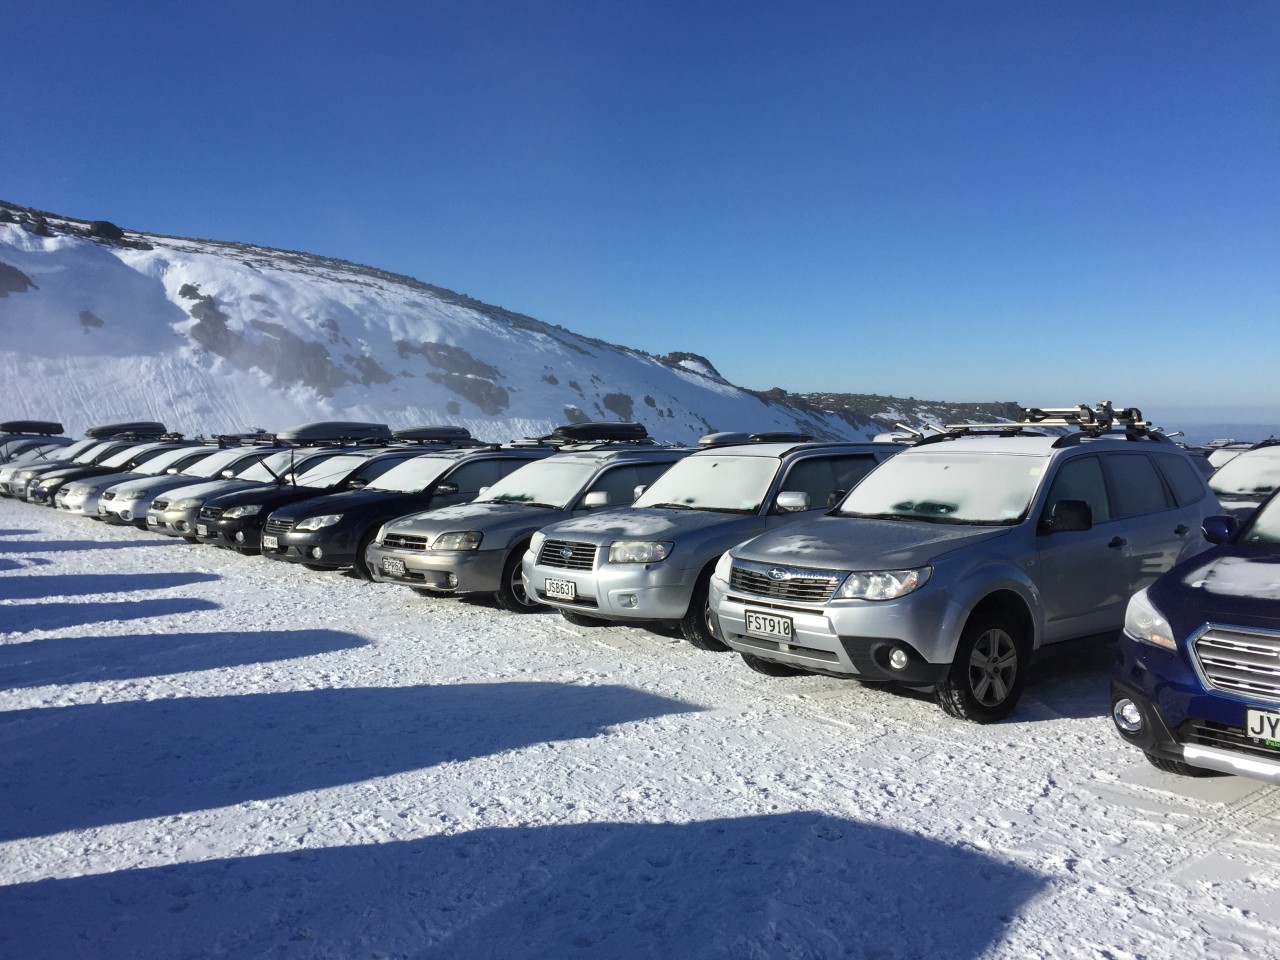 Subaru vehicles at Turoa ski area covered in now. 